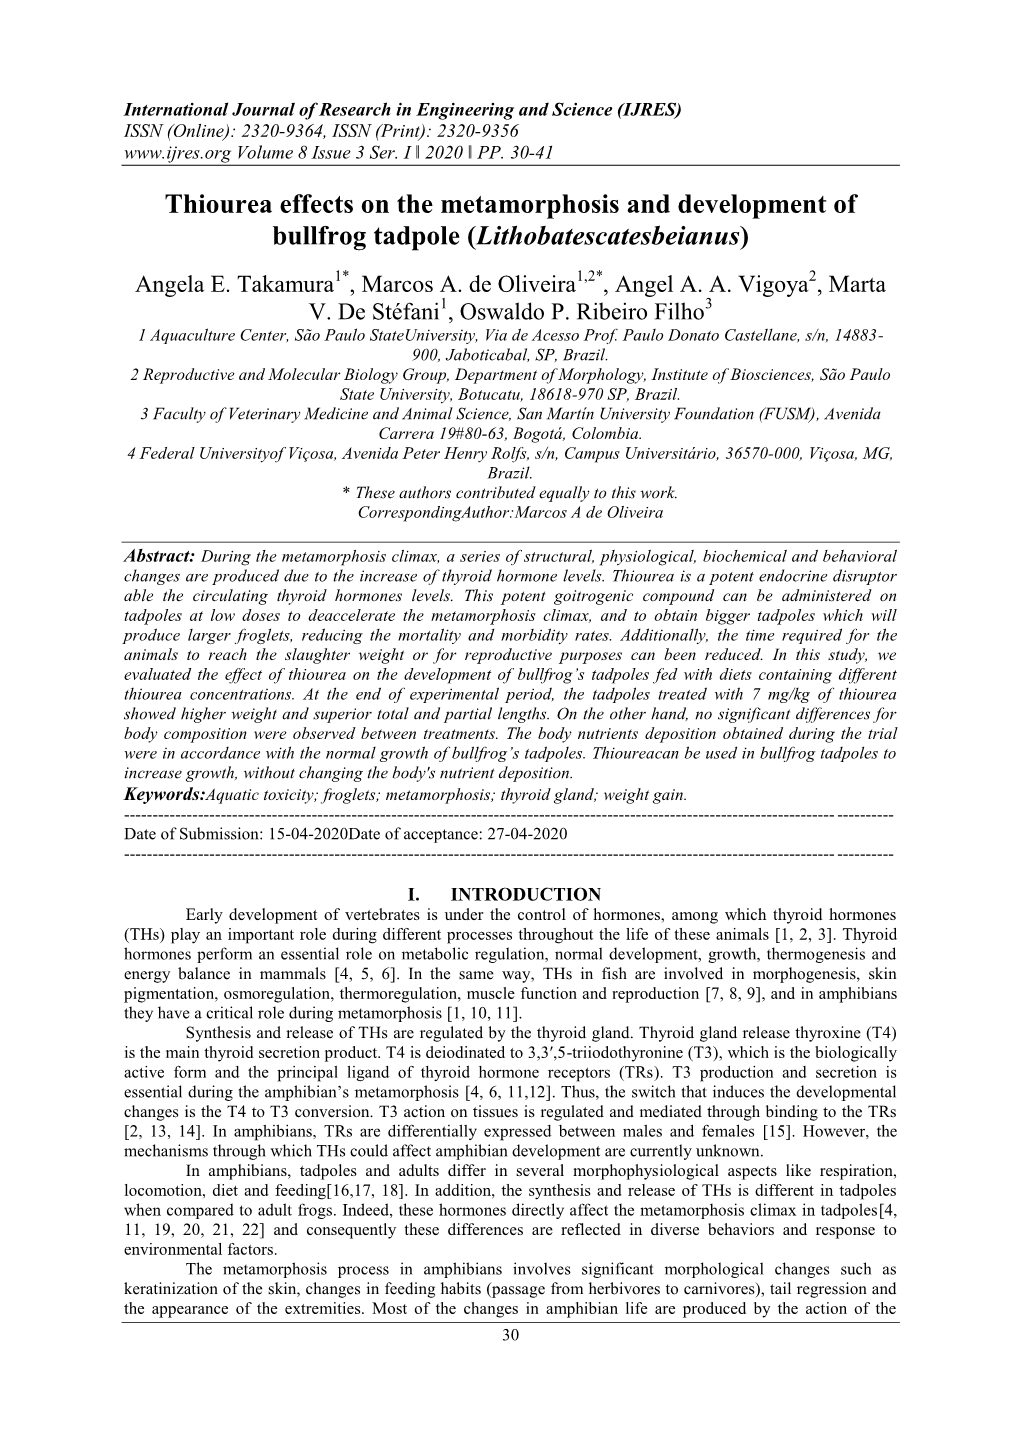 Thiourea Effects on the Metamorphosis and Development of Bullfrog Tadpole (Lithobatescatesbeianus)